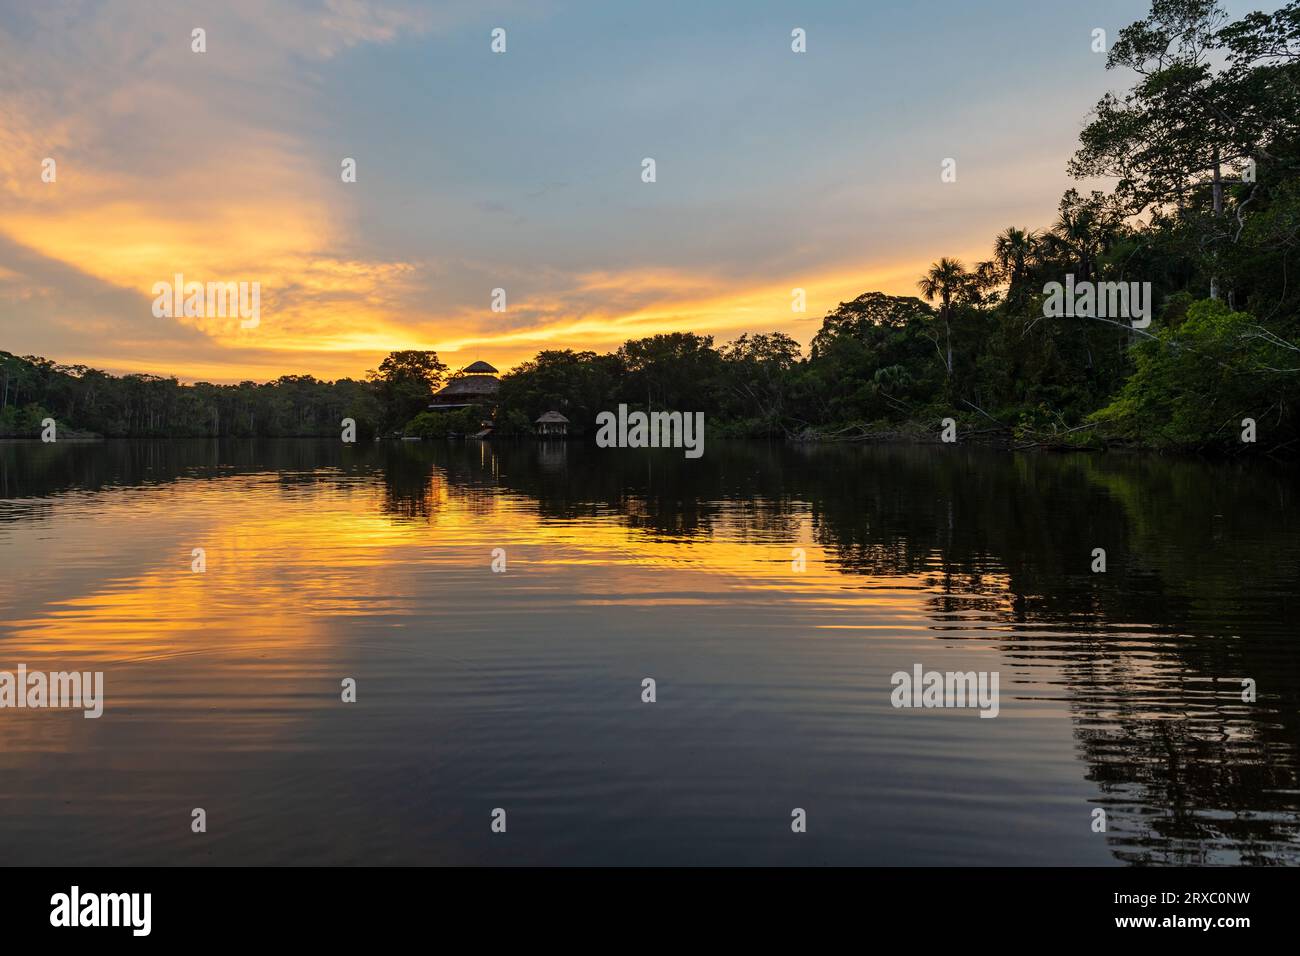 Amazon River Rainforest sunset reflection, Yasuni national park, Ecuador. Stock Photo